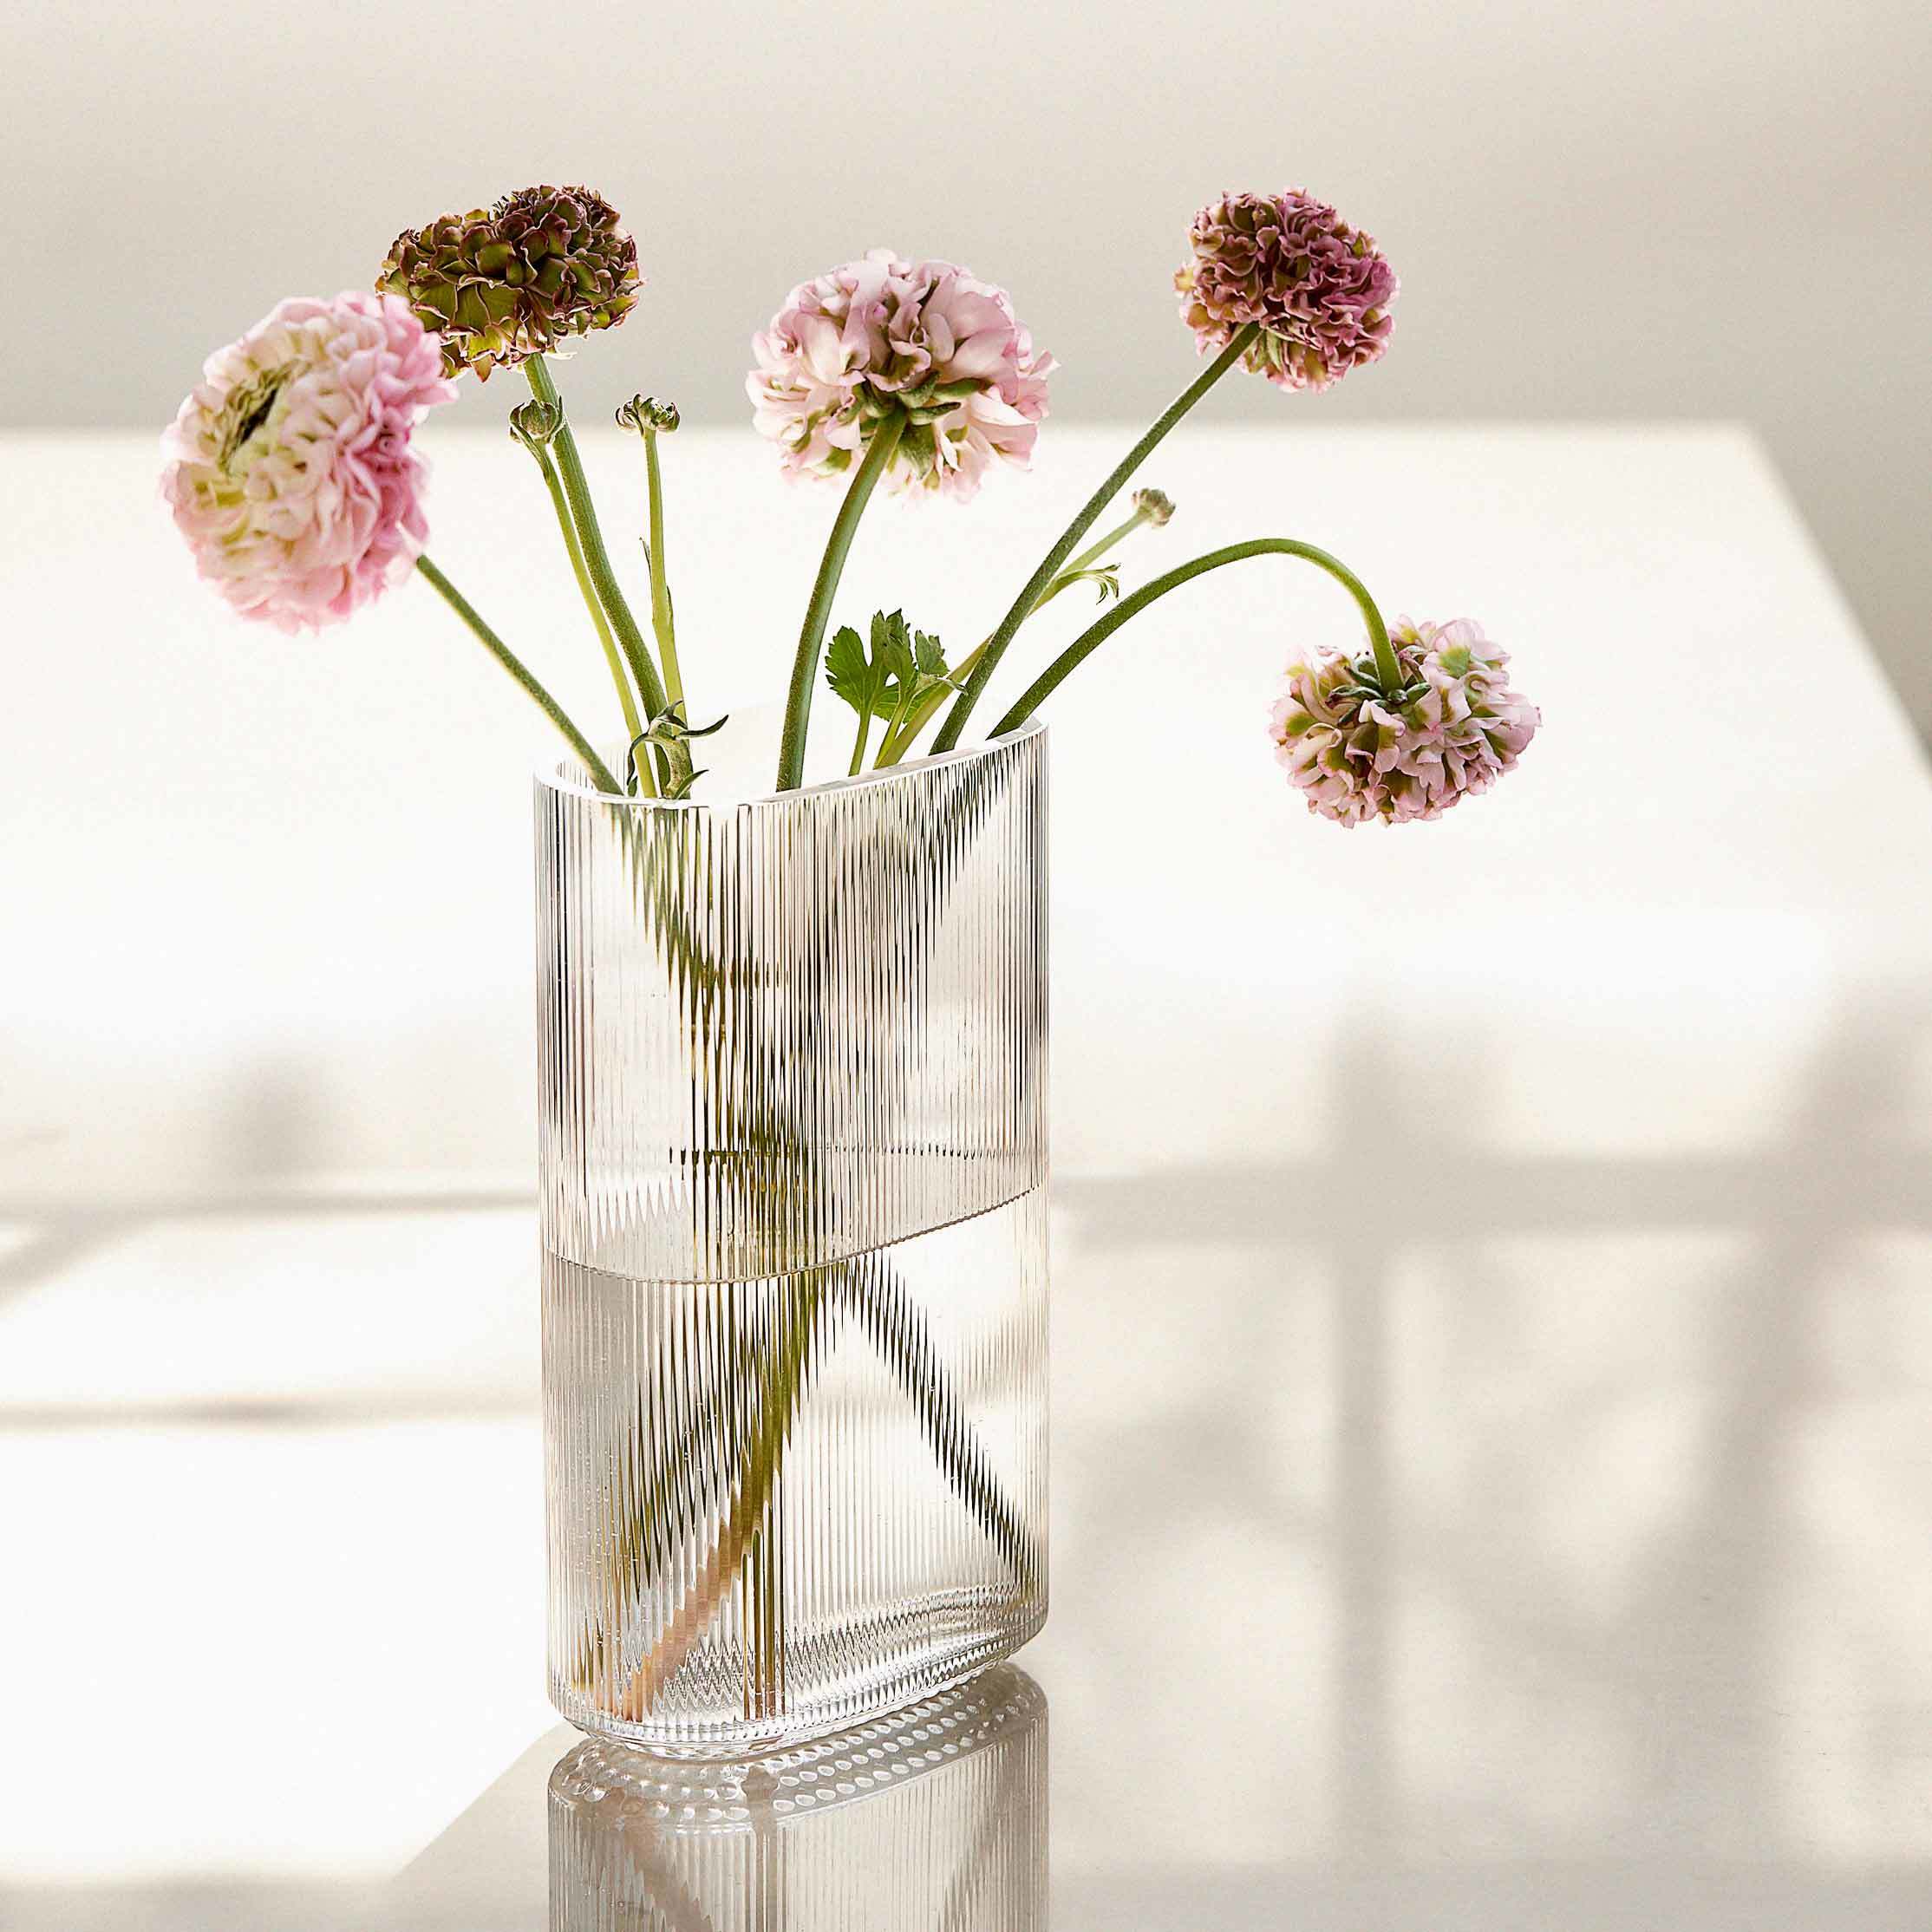 Arctic glass vase, small clear, no:6110300. Nytillverkat 2018 av Warm Nordic A/S, Danmark